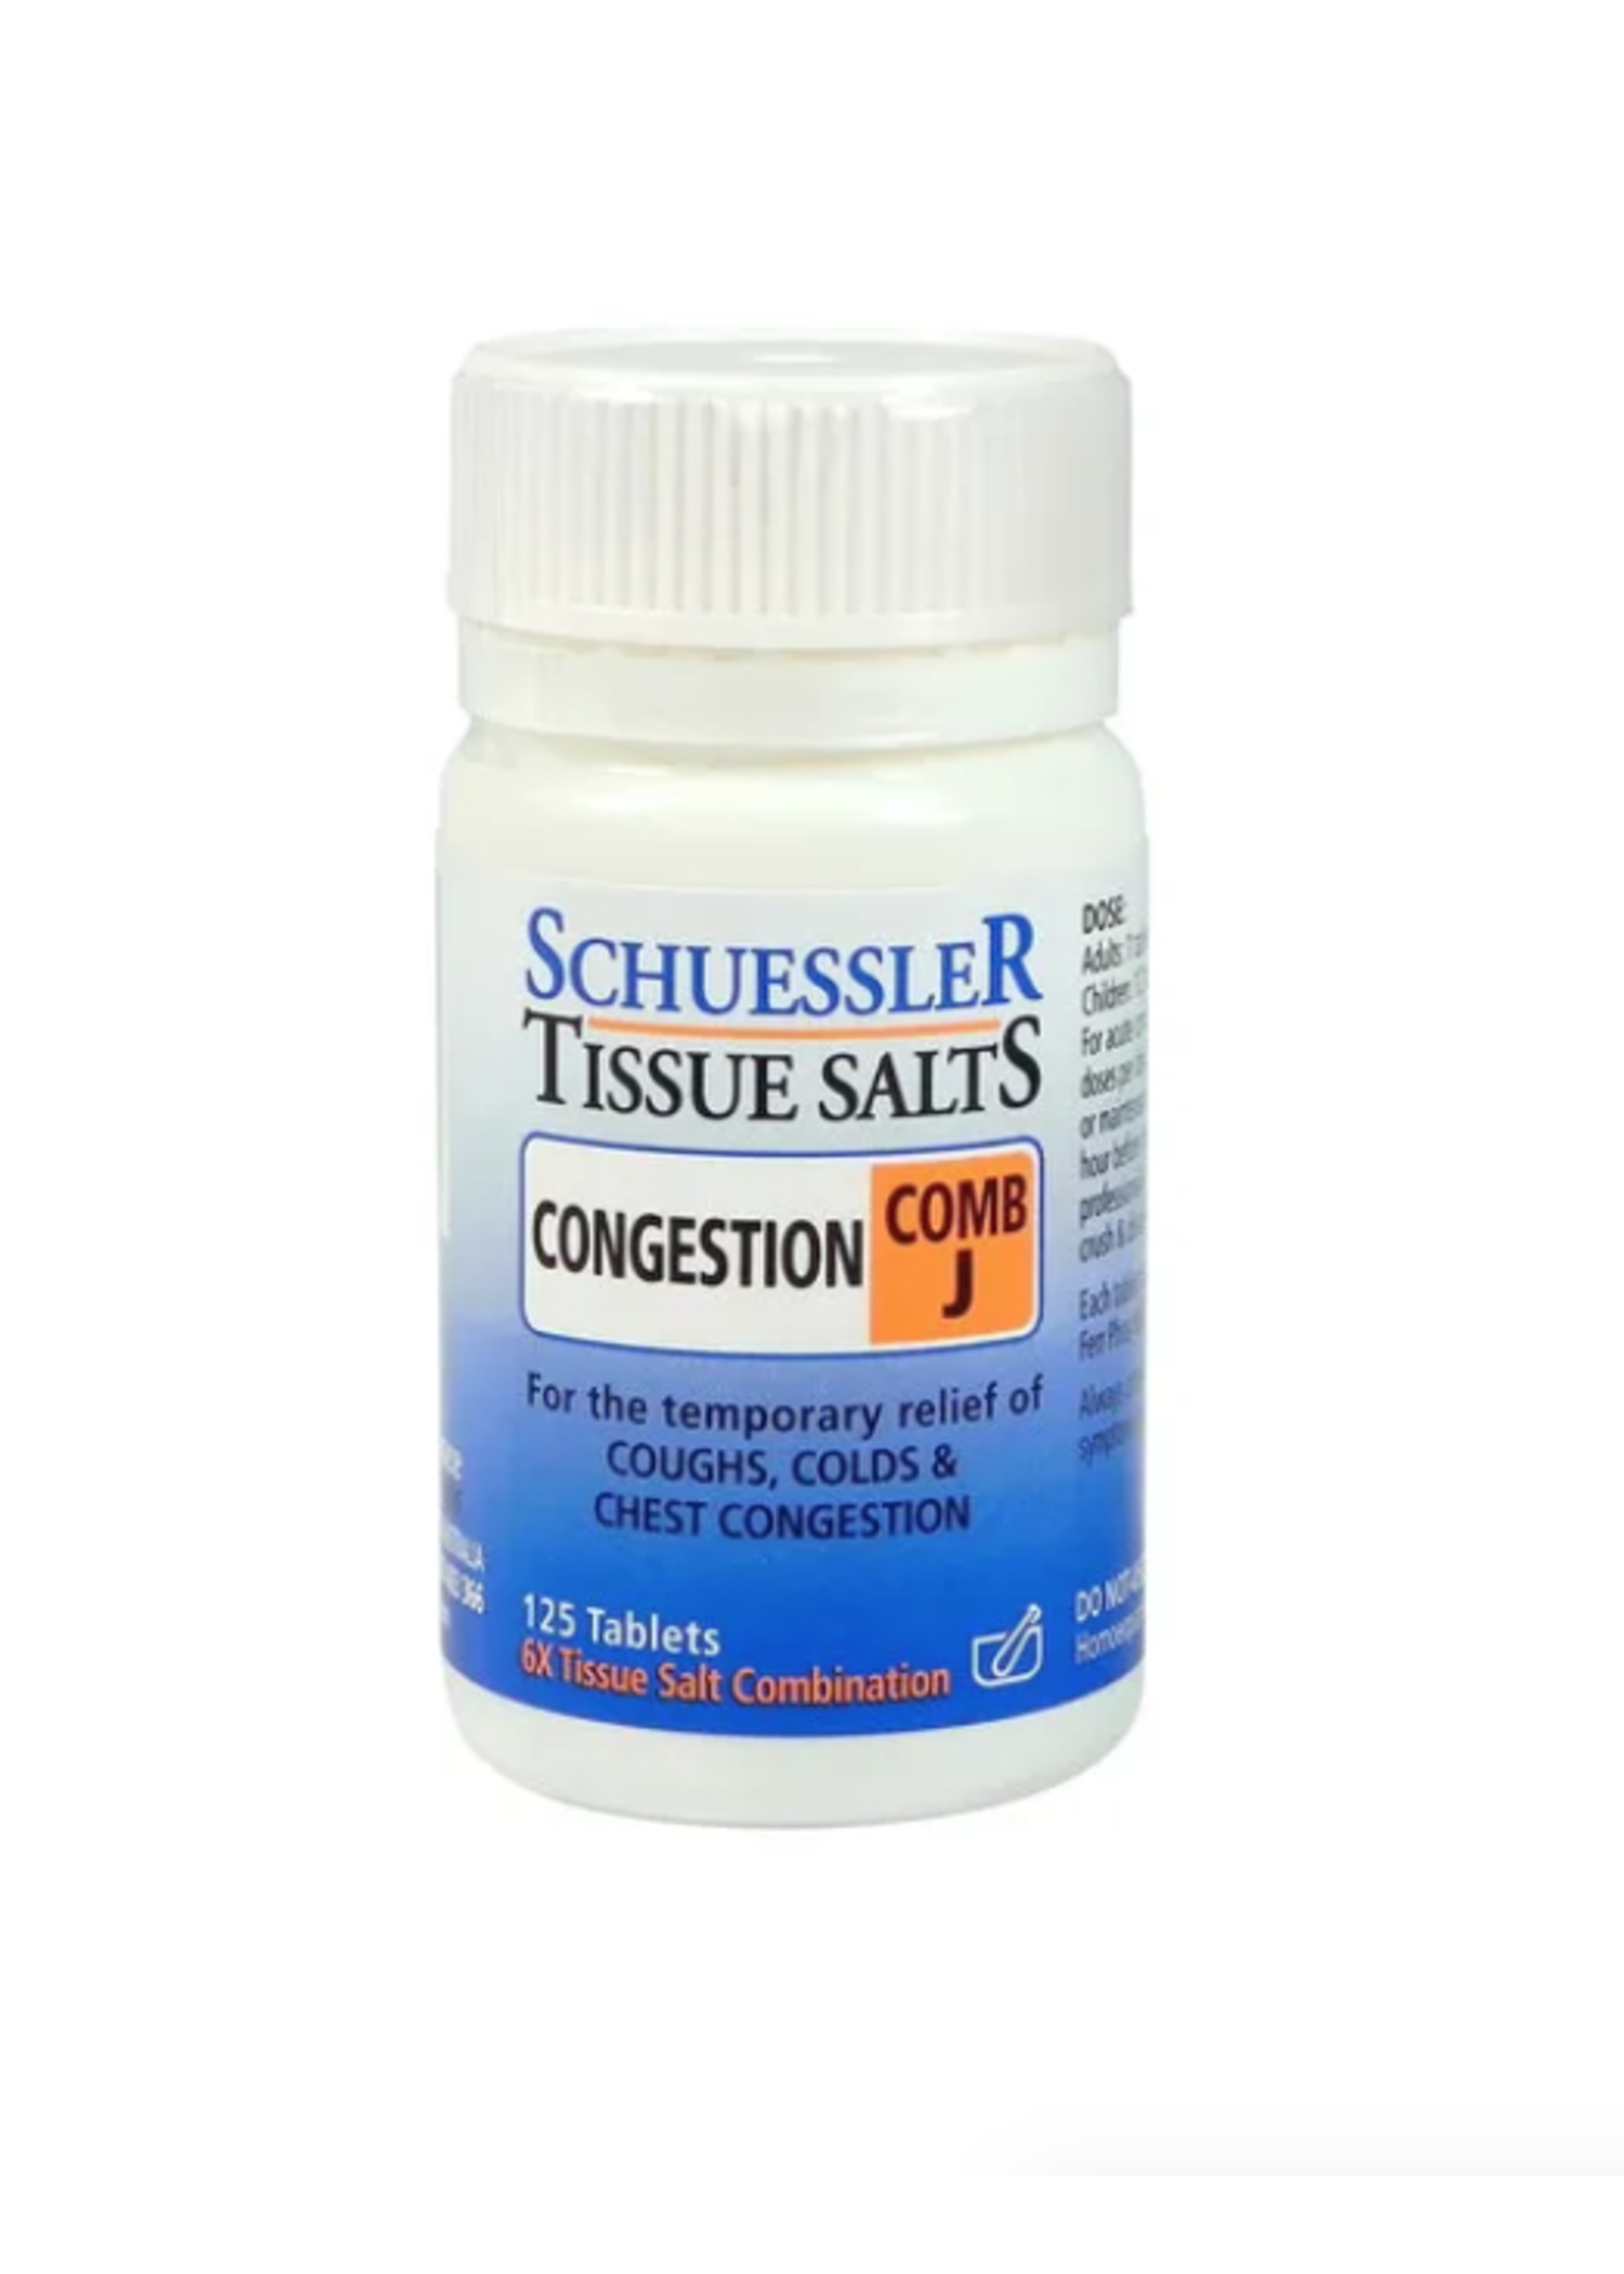 Martin & Pleasance Martin & Pleasance Schuessler Tissue Salts Congestion Comb J 125 tabs